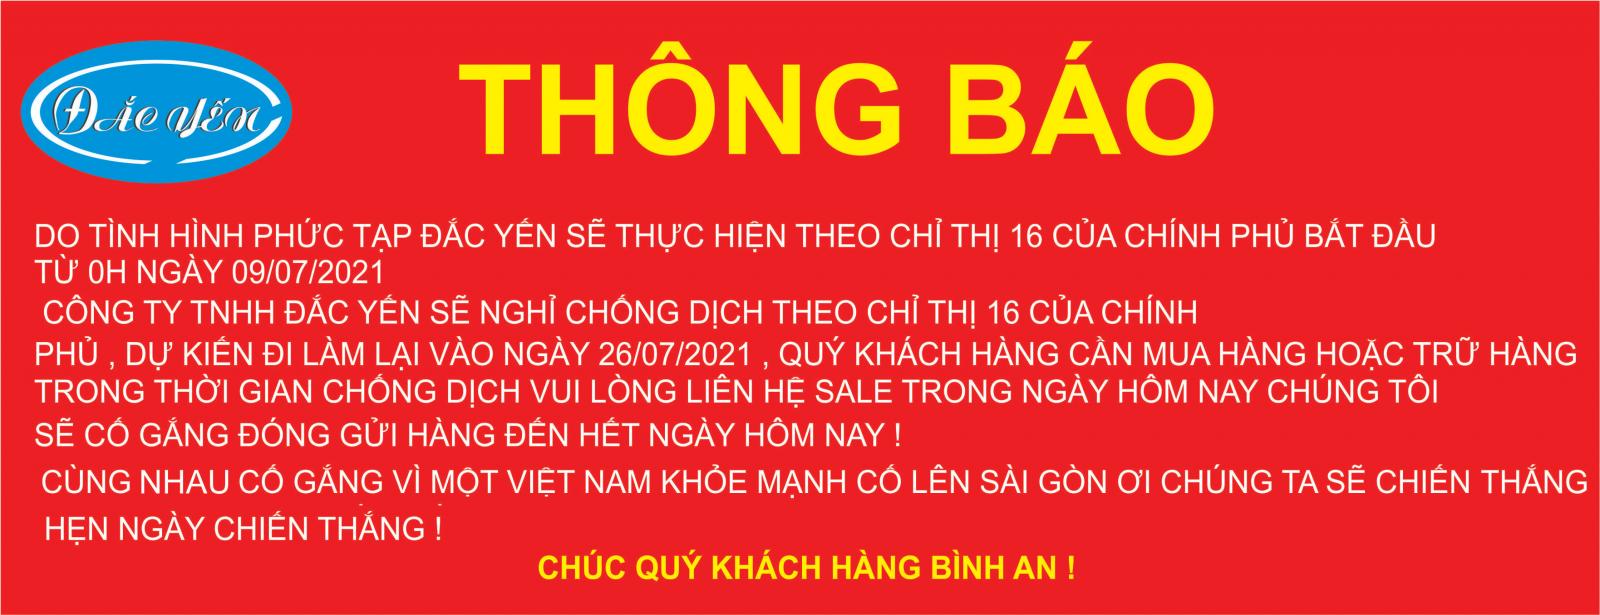 phutungotovietnam.com.vn